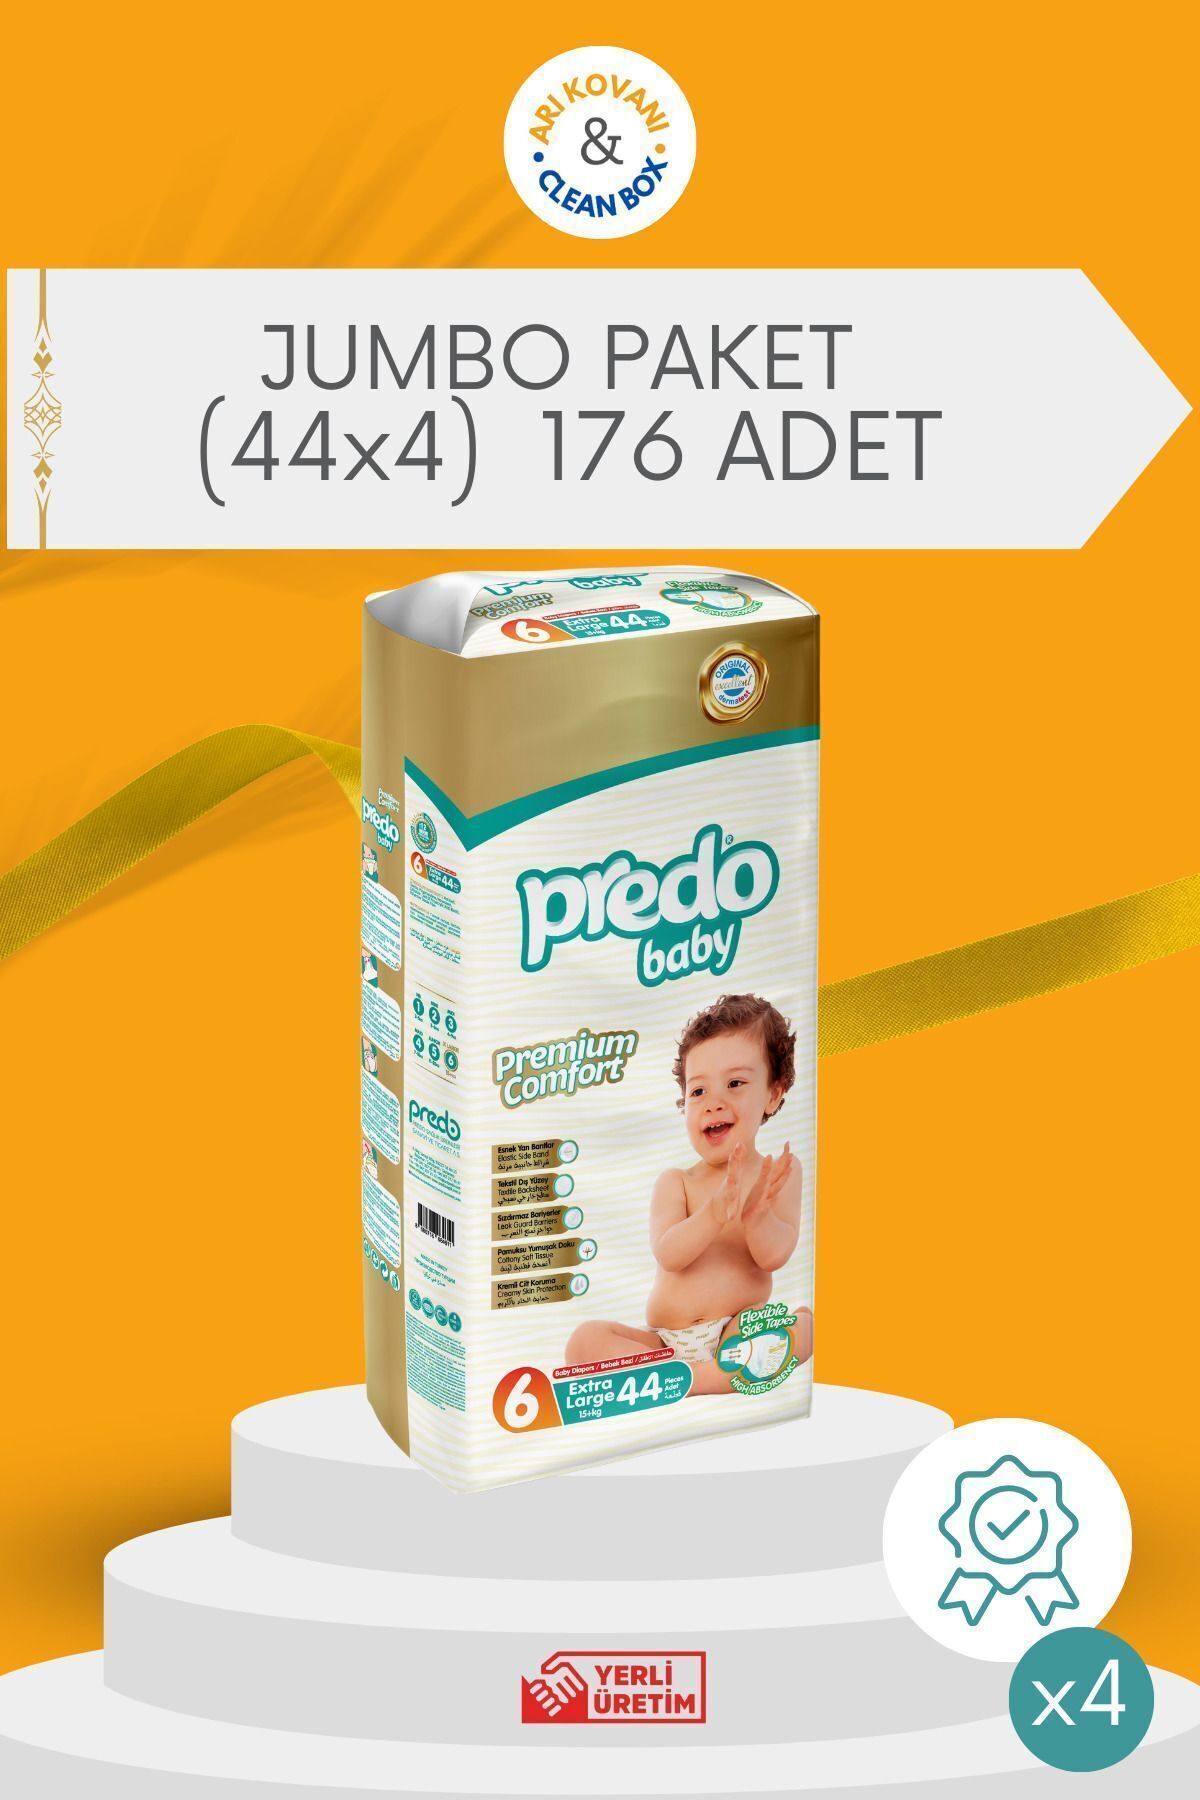 PREDO Premium Comfort Bebek Bezi 6 Numara 44 Adet (4 lü Süper Avantaj Paketi) 176 Adet